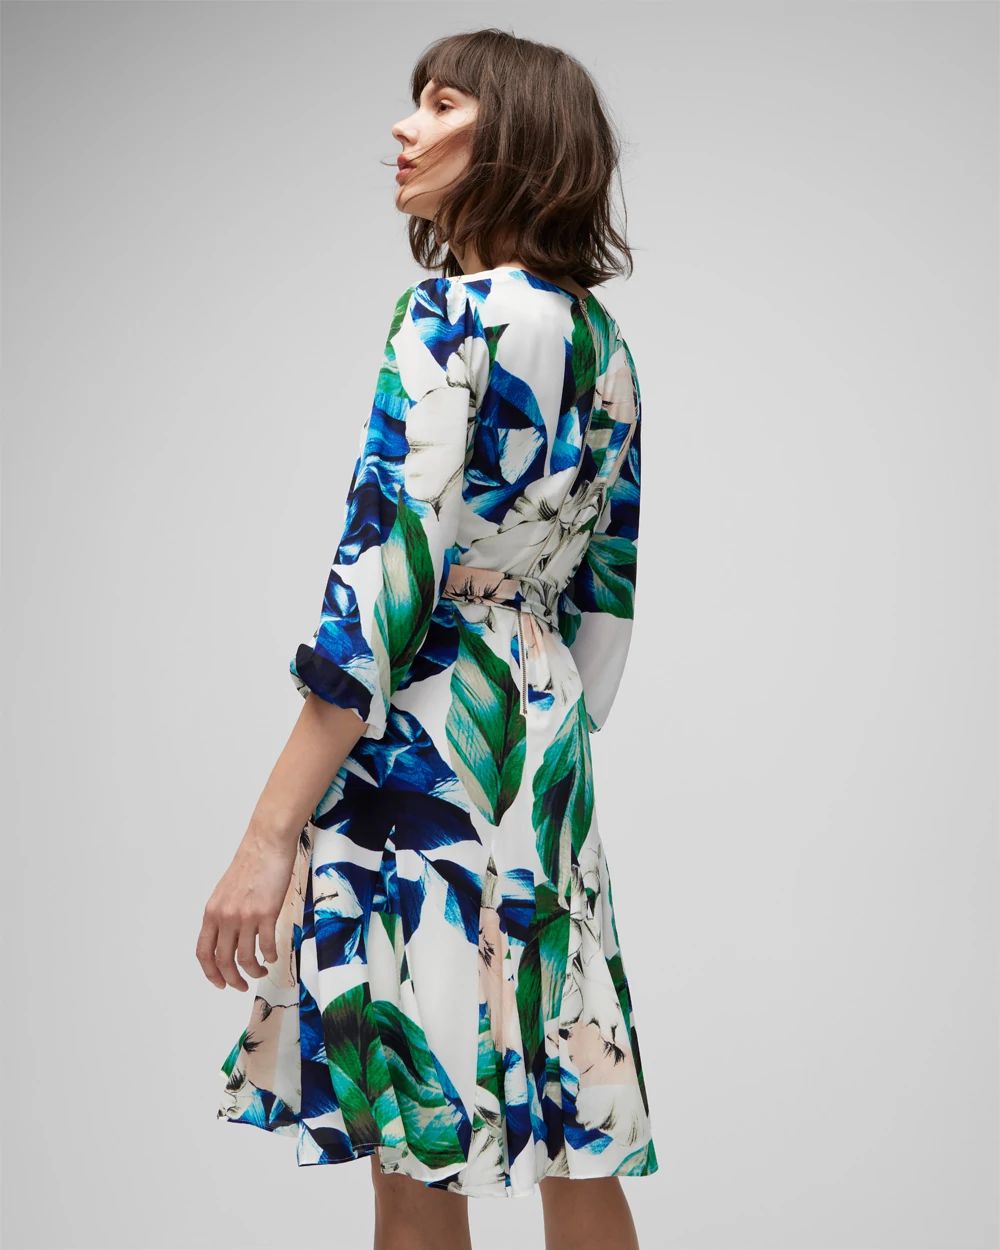 Godet Dress click to view larger image.